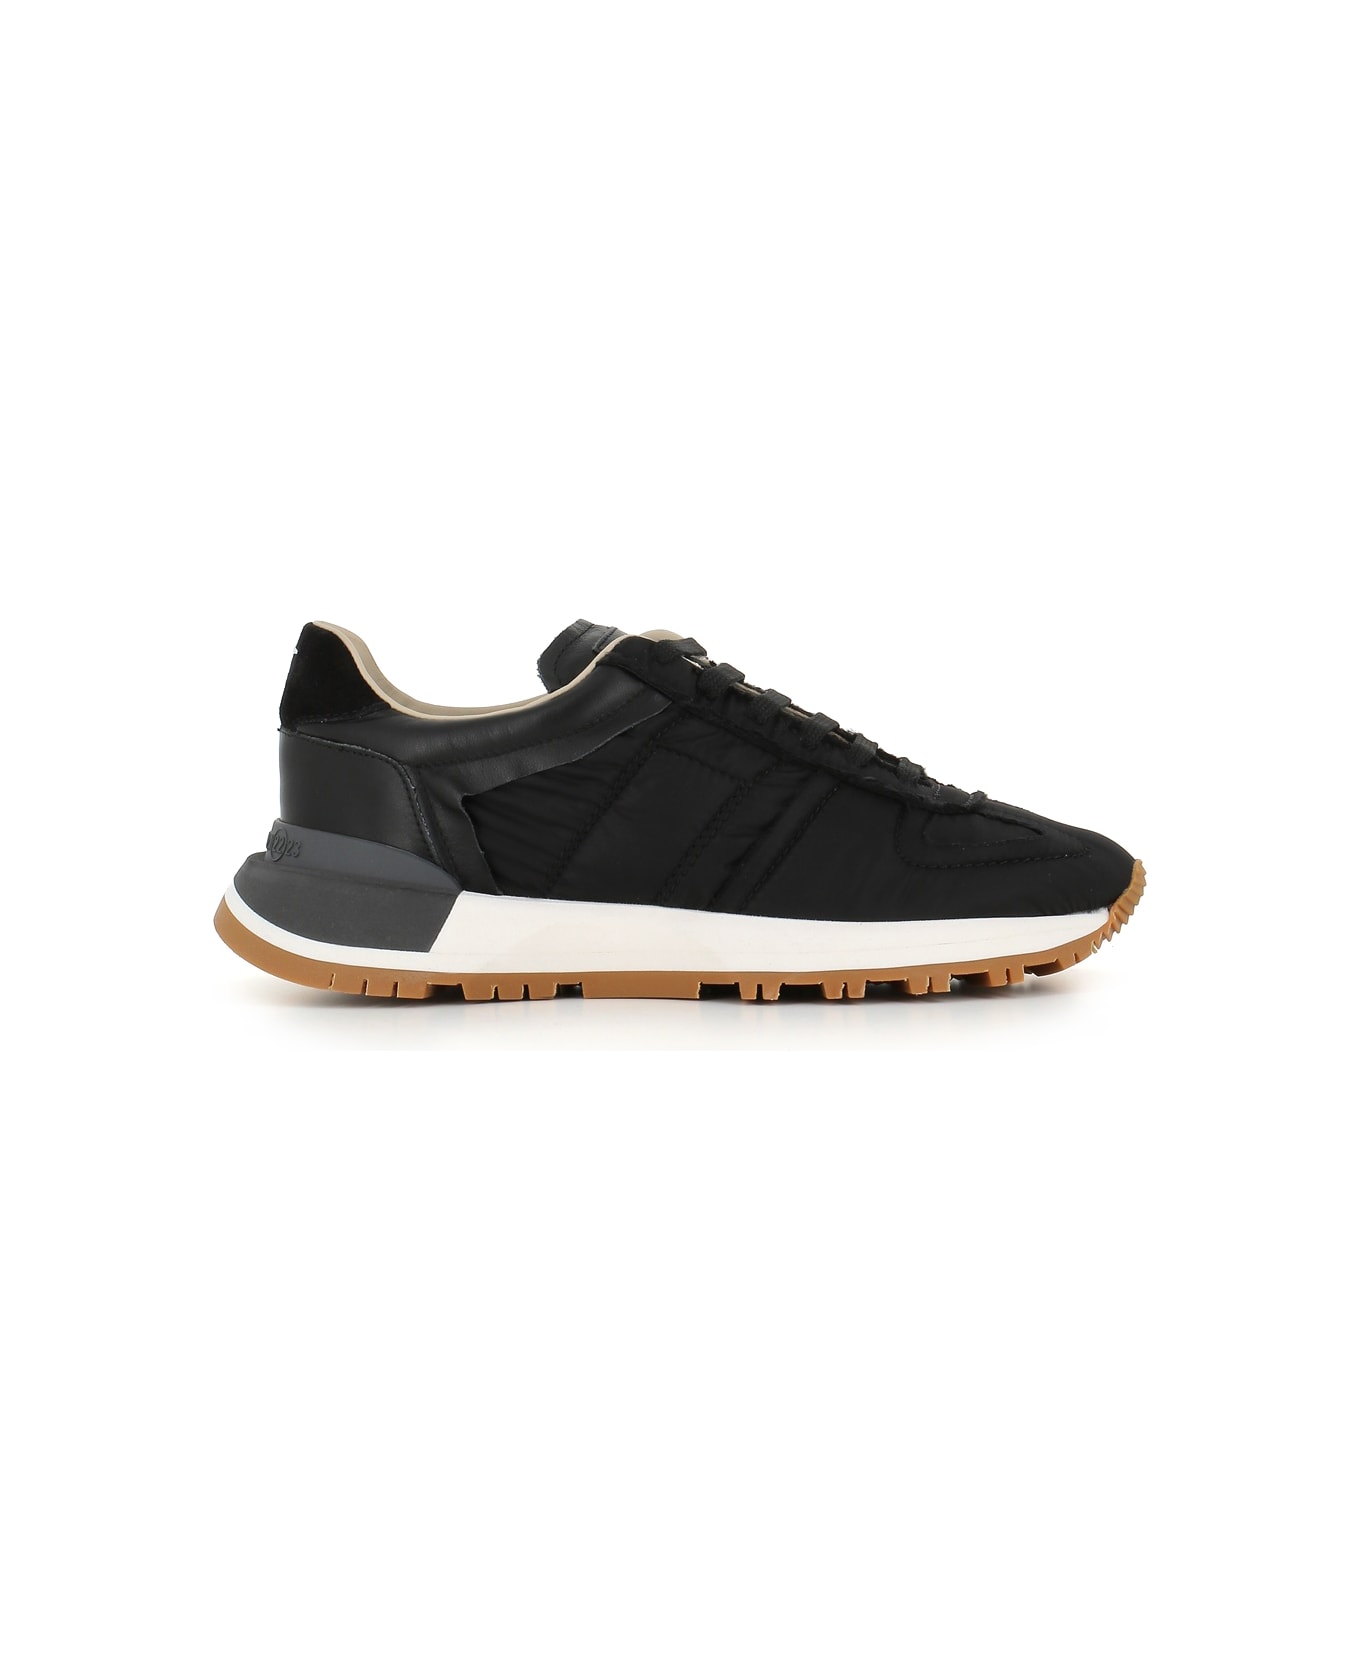 Maison Margiela Sneaker S58ws0213 - Black